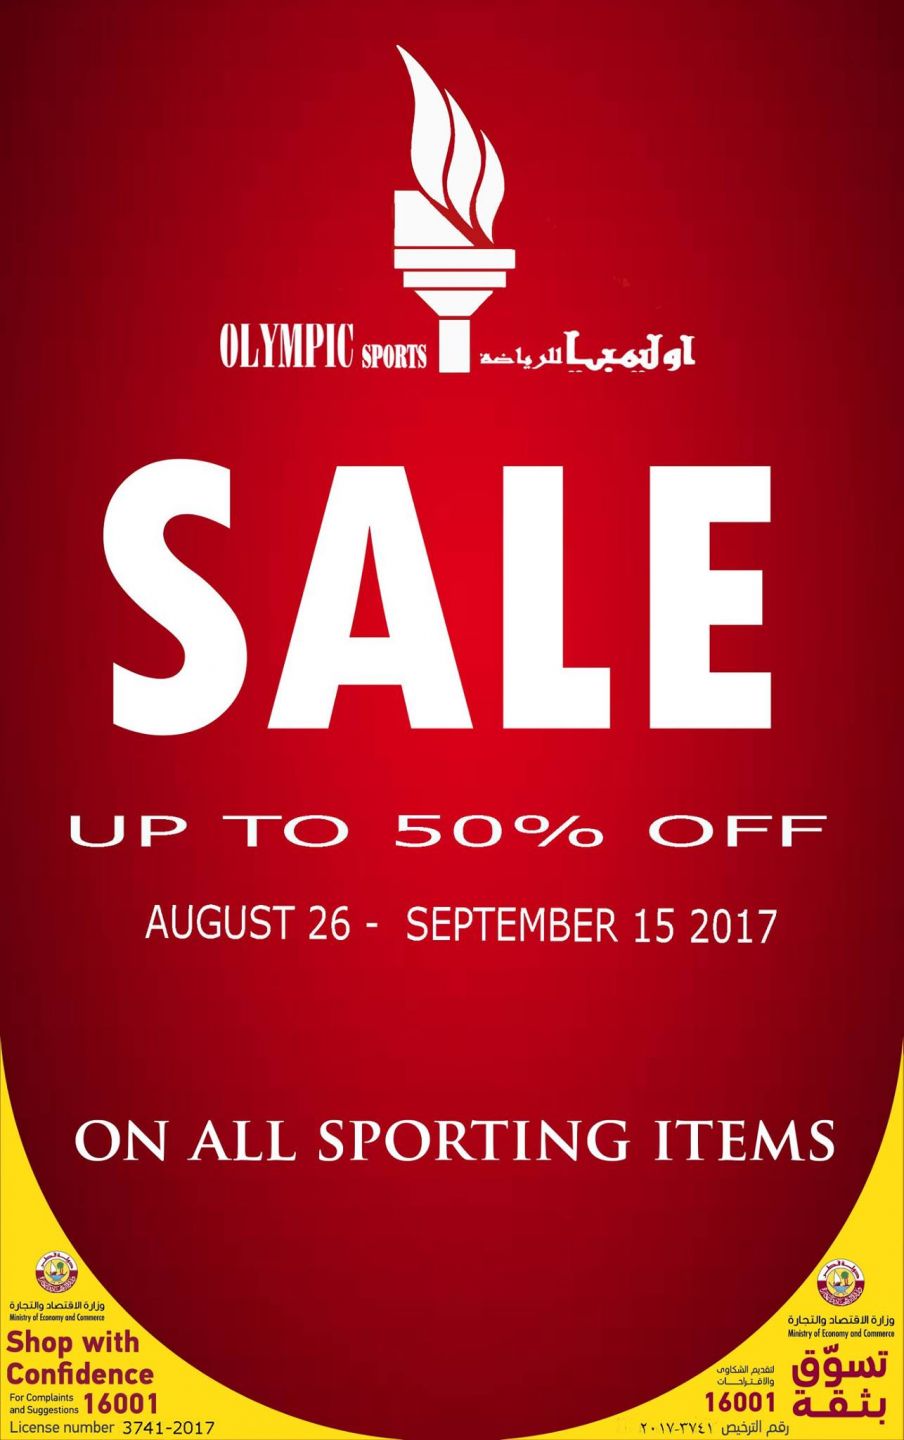 Olympic Sports Qatar Offers